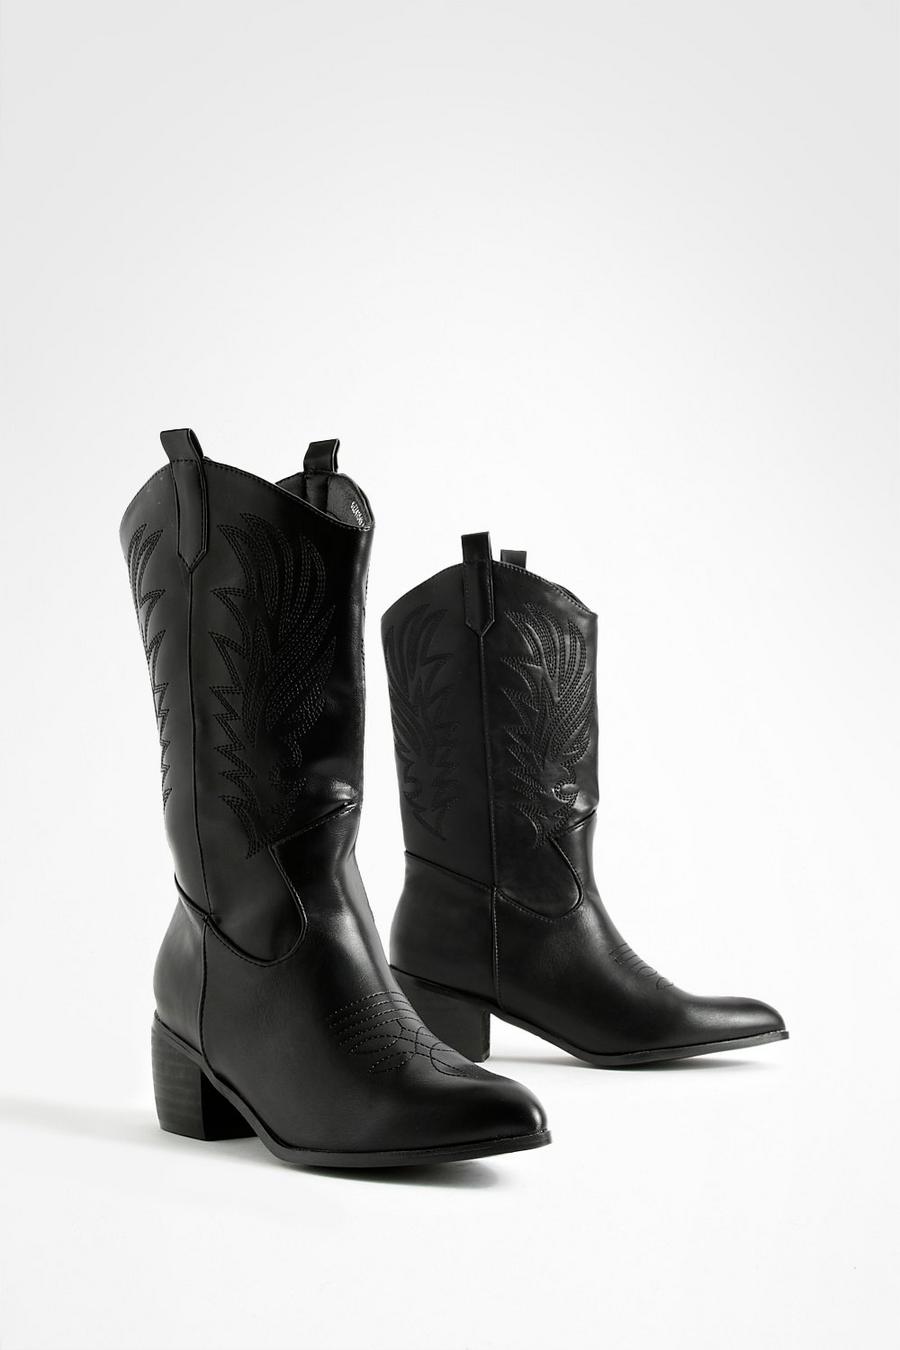 Women's Boots, Black Boots For Women